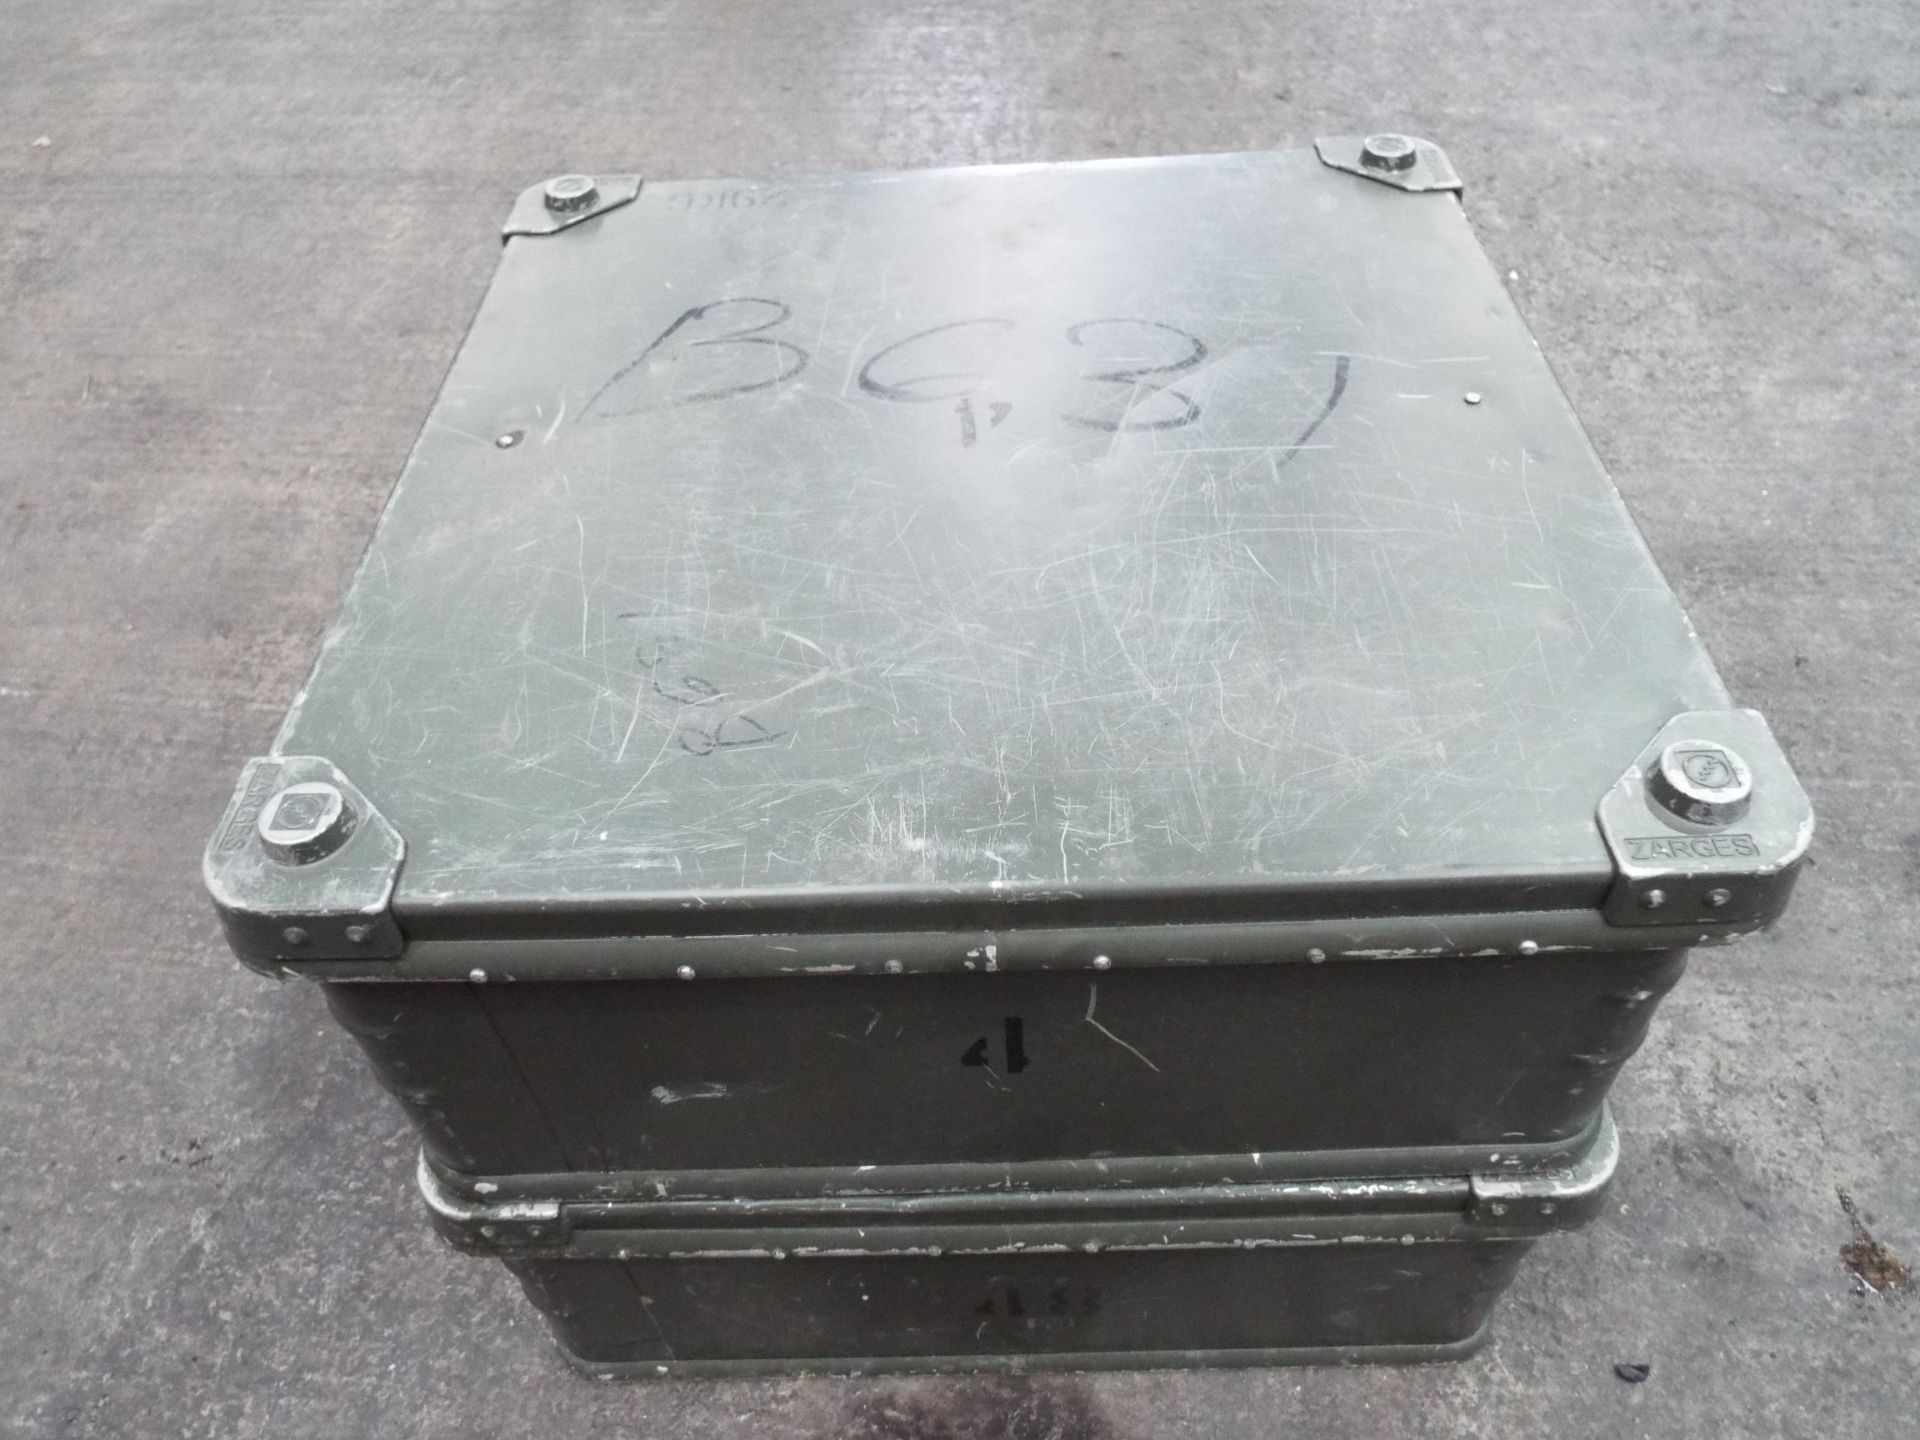 2 x Heavy Duty Zarges Aluminium Cases - Image 5 of 5